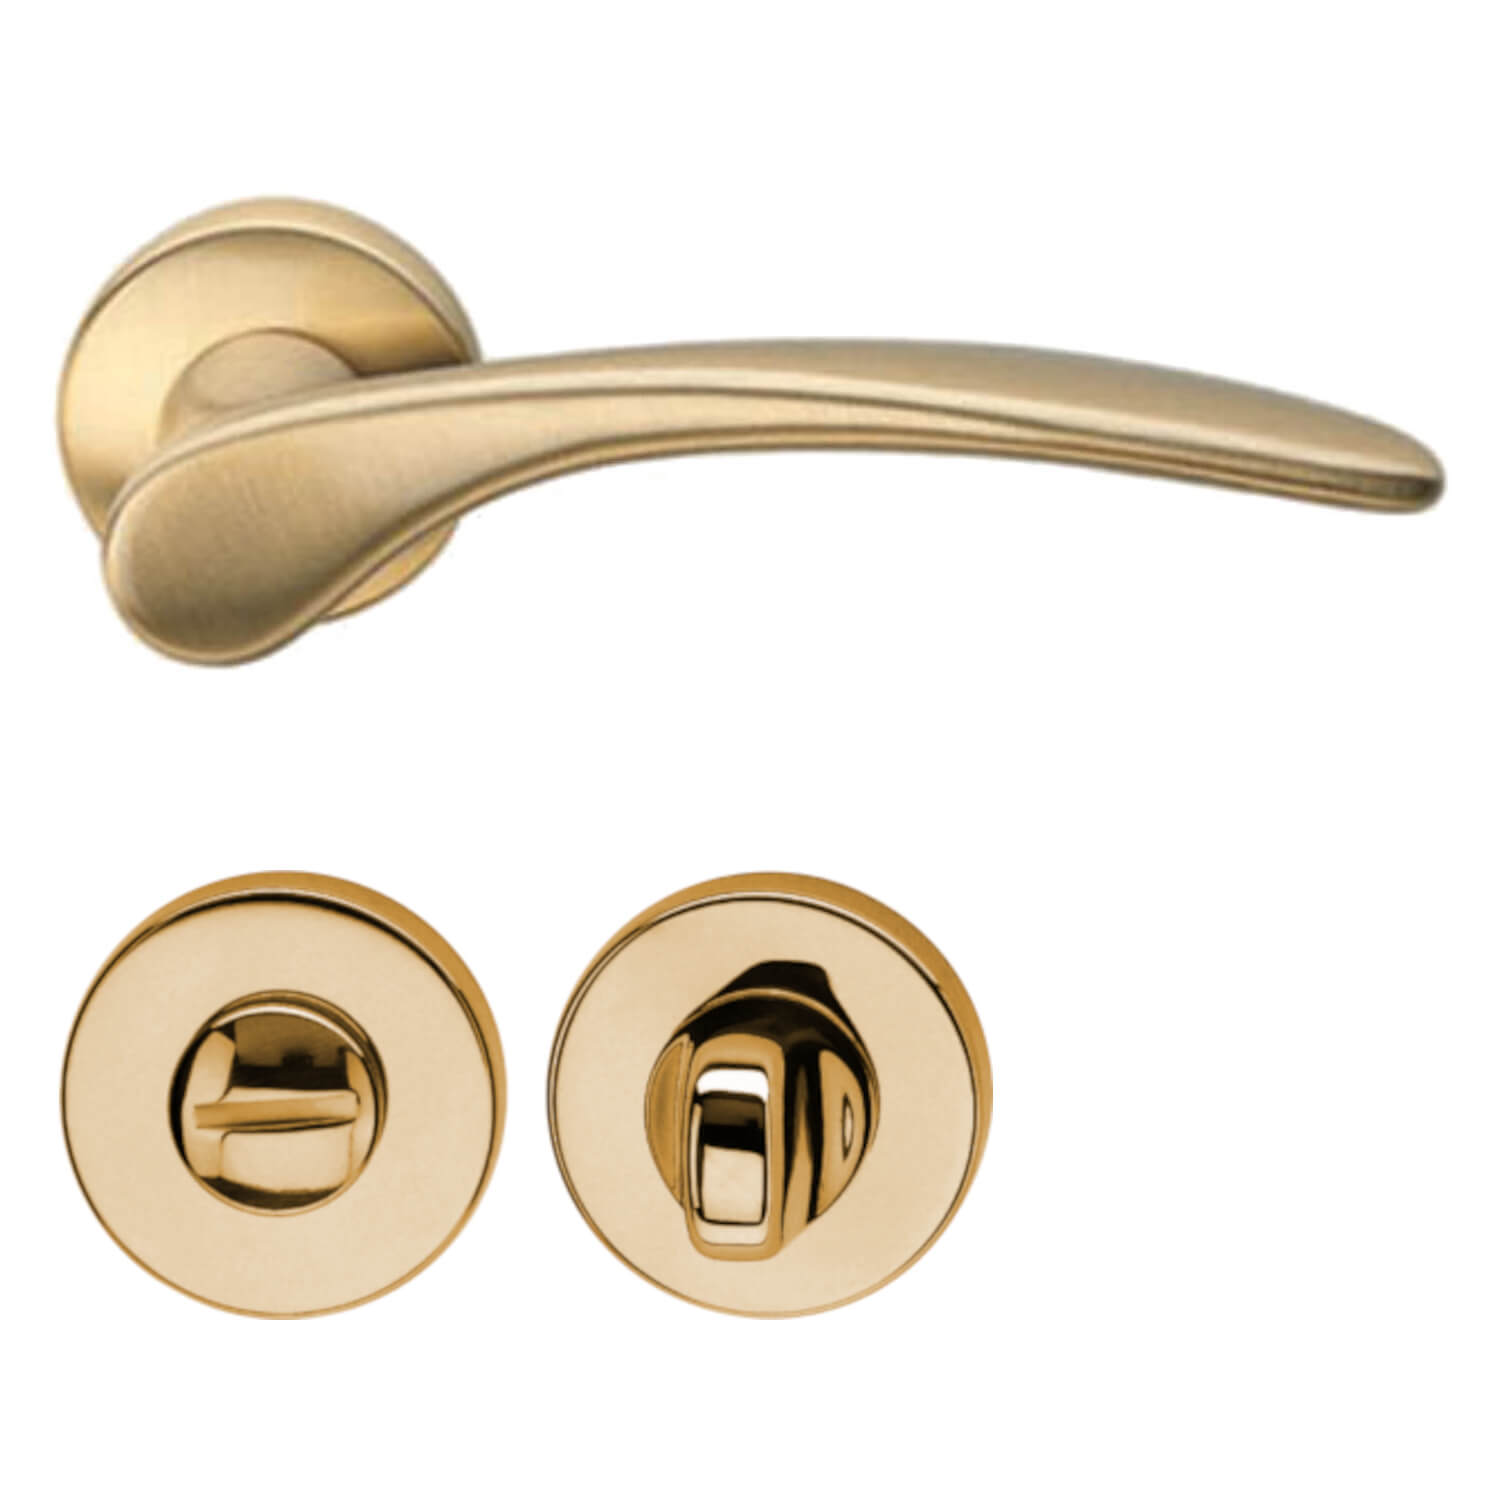 https://sw9762.sfstatic.io/upload_dir/shop/vallievalli/Doergreb-MIZAR-toiletbesaetning-boerstet-messing-door-handle-brushed-brass-privacy-lock-villahus.jpeg